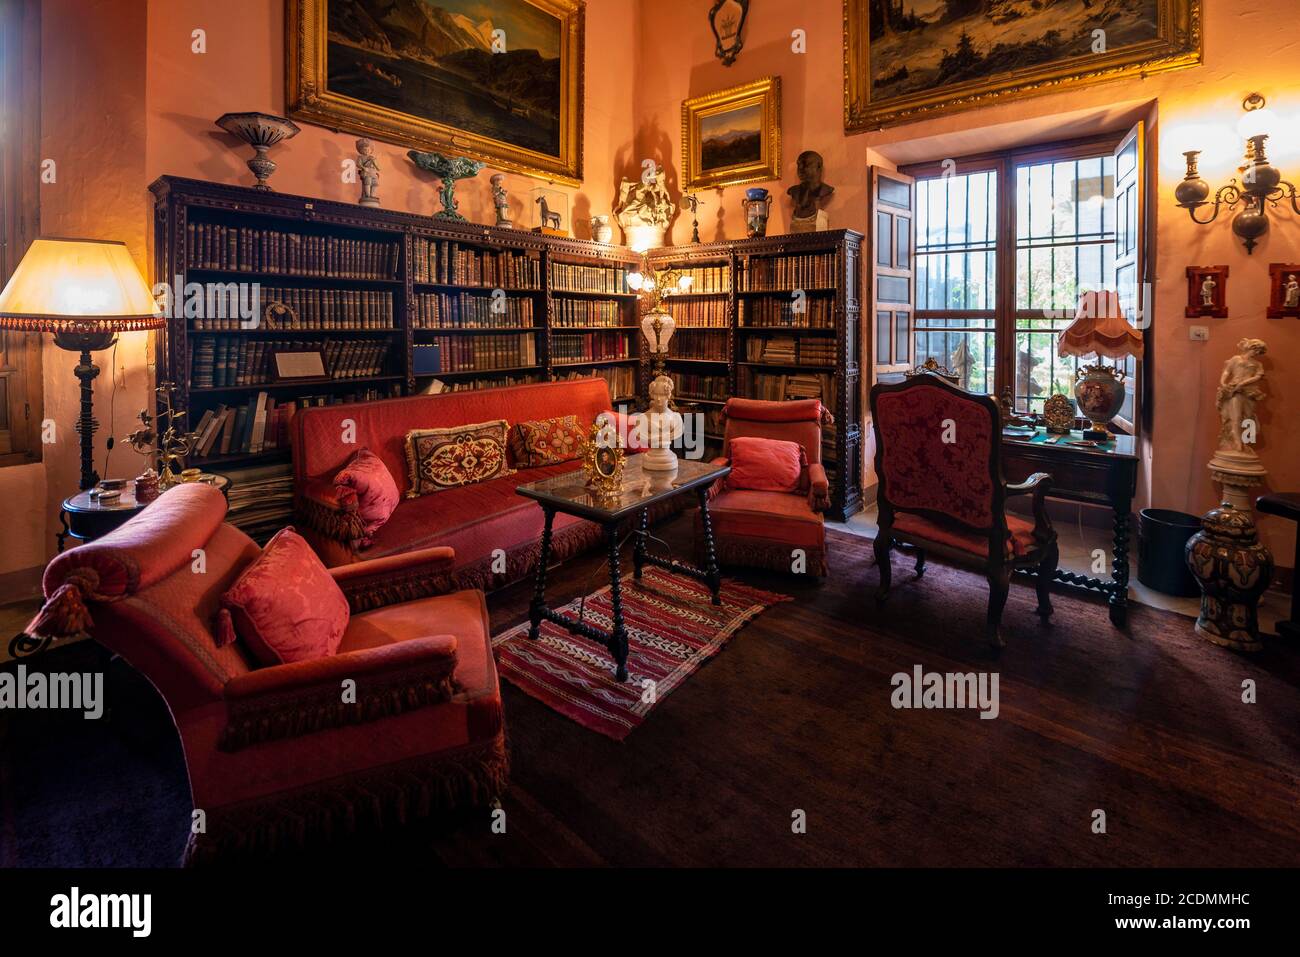 Living room, interior, Andalusian noble palace, Palacio de las Duenas, Sevilla, Andalusia, Spain Stock Photo